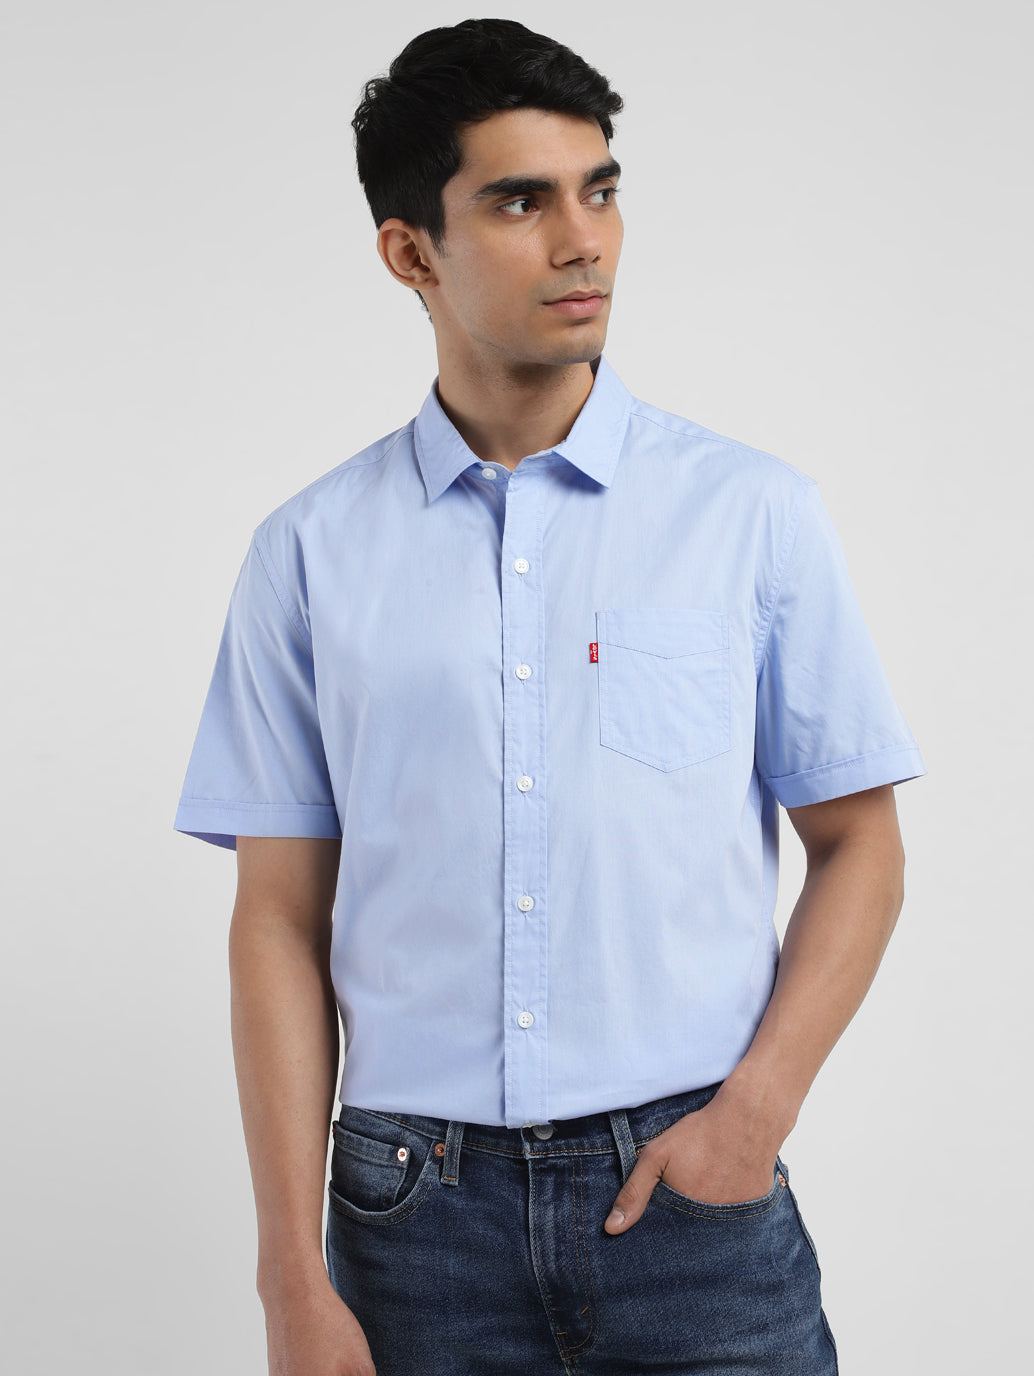 Numero Uno Pure Cotton Denim Blue Textured Shirt | NMSHFA2040-BLUE DENIM |  Cilory.com